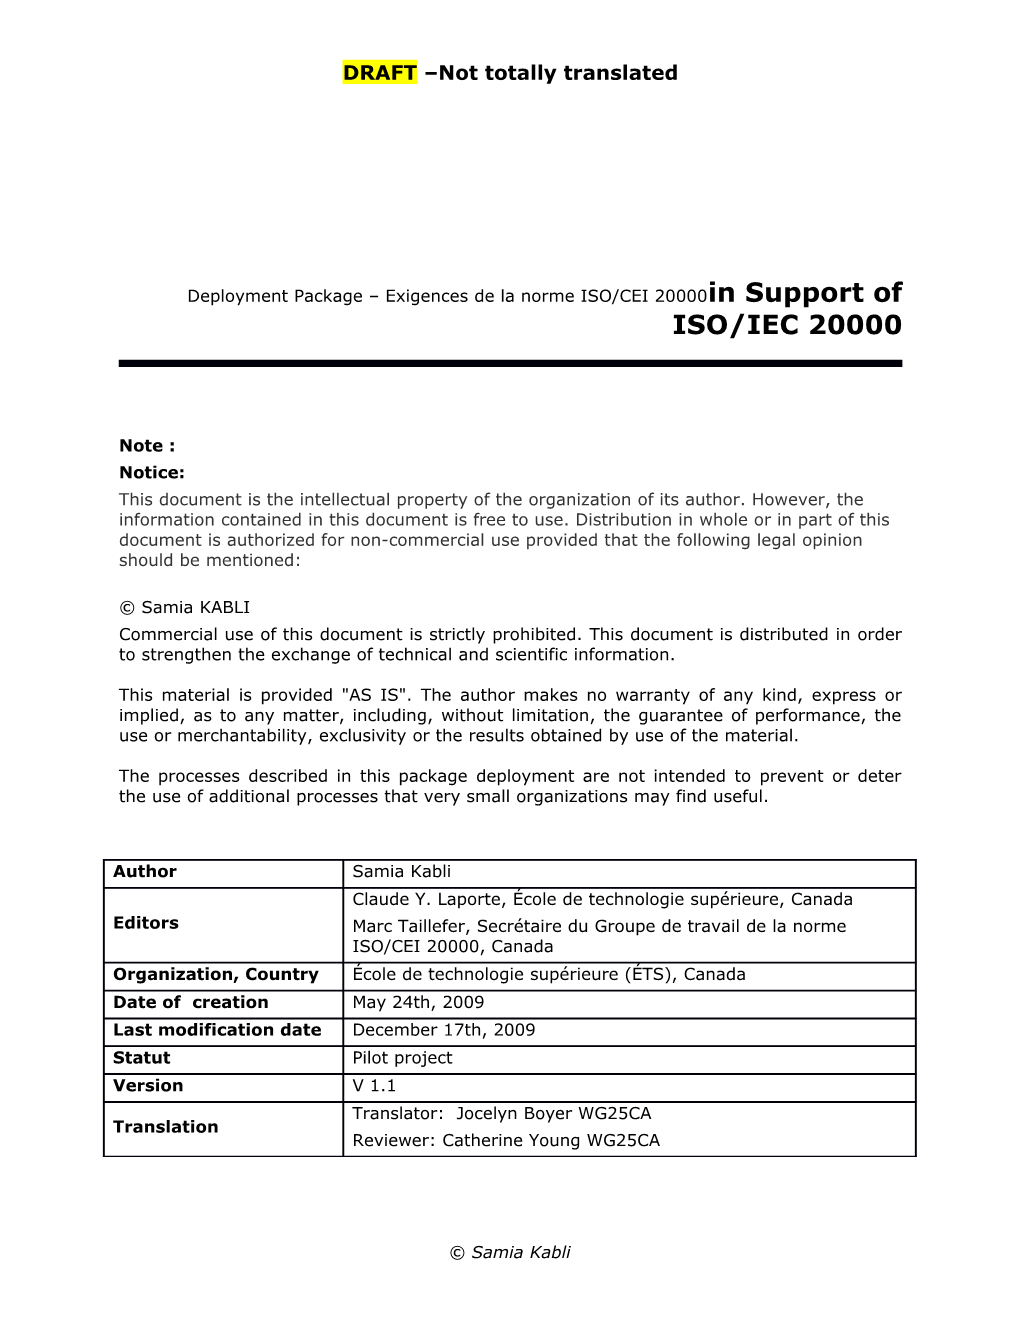 Deployment Package Exigences De La Norme ISO/CEI 20000